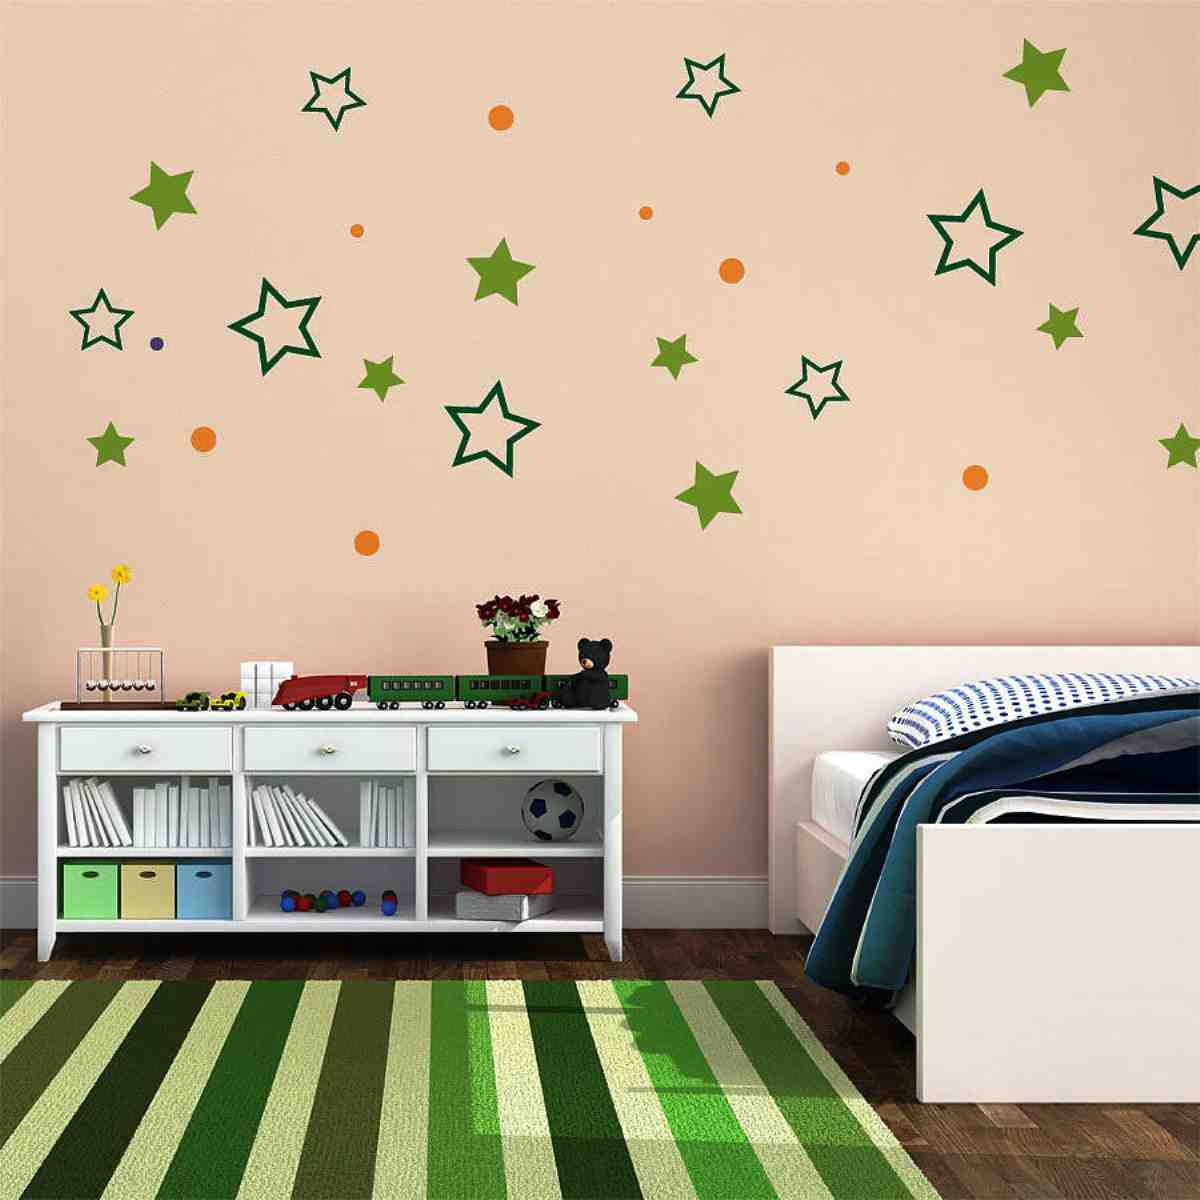 Best ideas about DIY Bedroom Wall Decoration
. Save or Pin Diy Wall Decor Ideas for Bedroom Decor IdeasDecor Ideas Now.